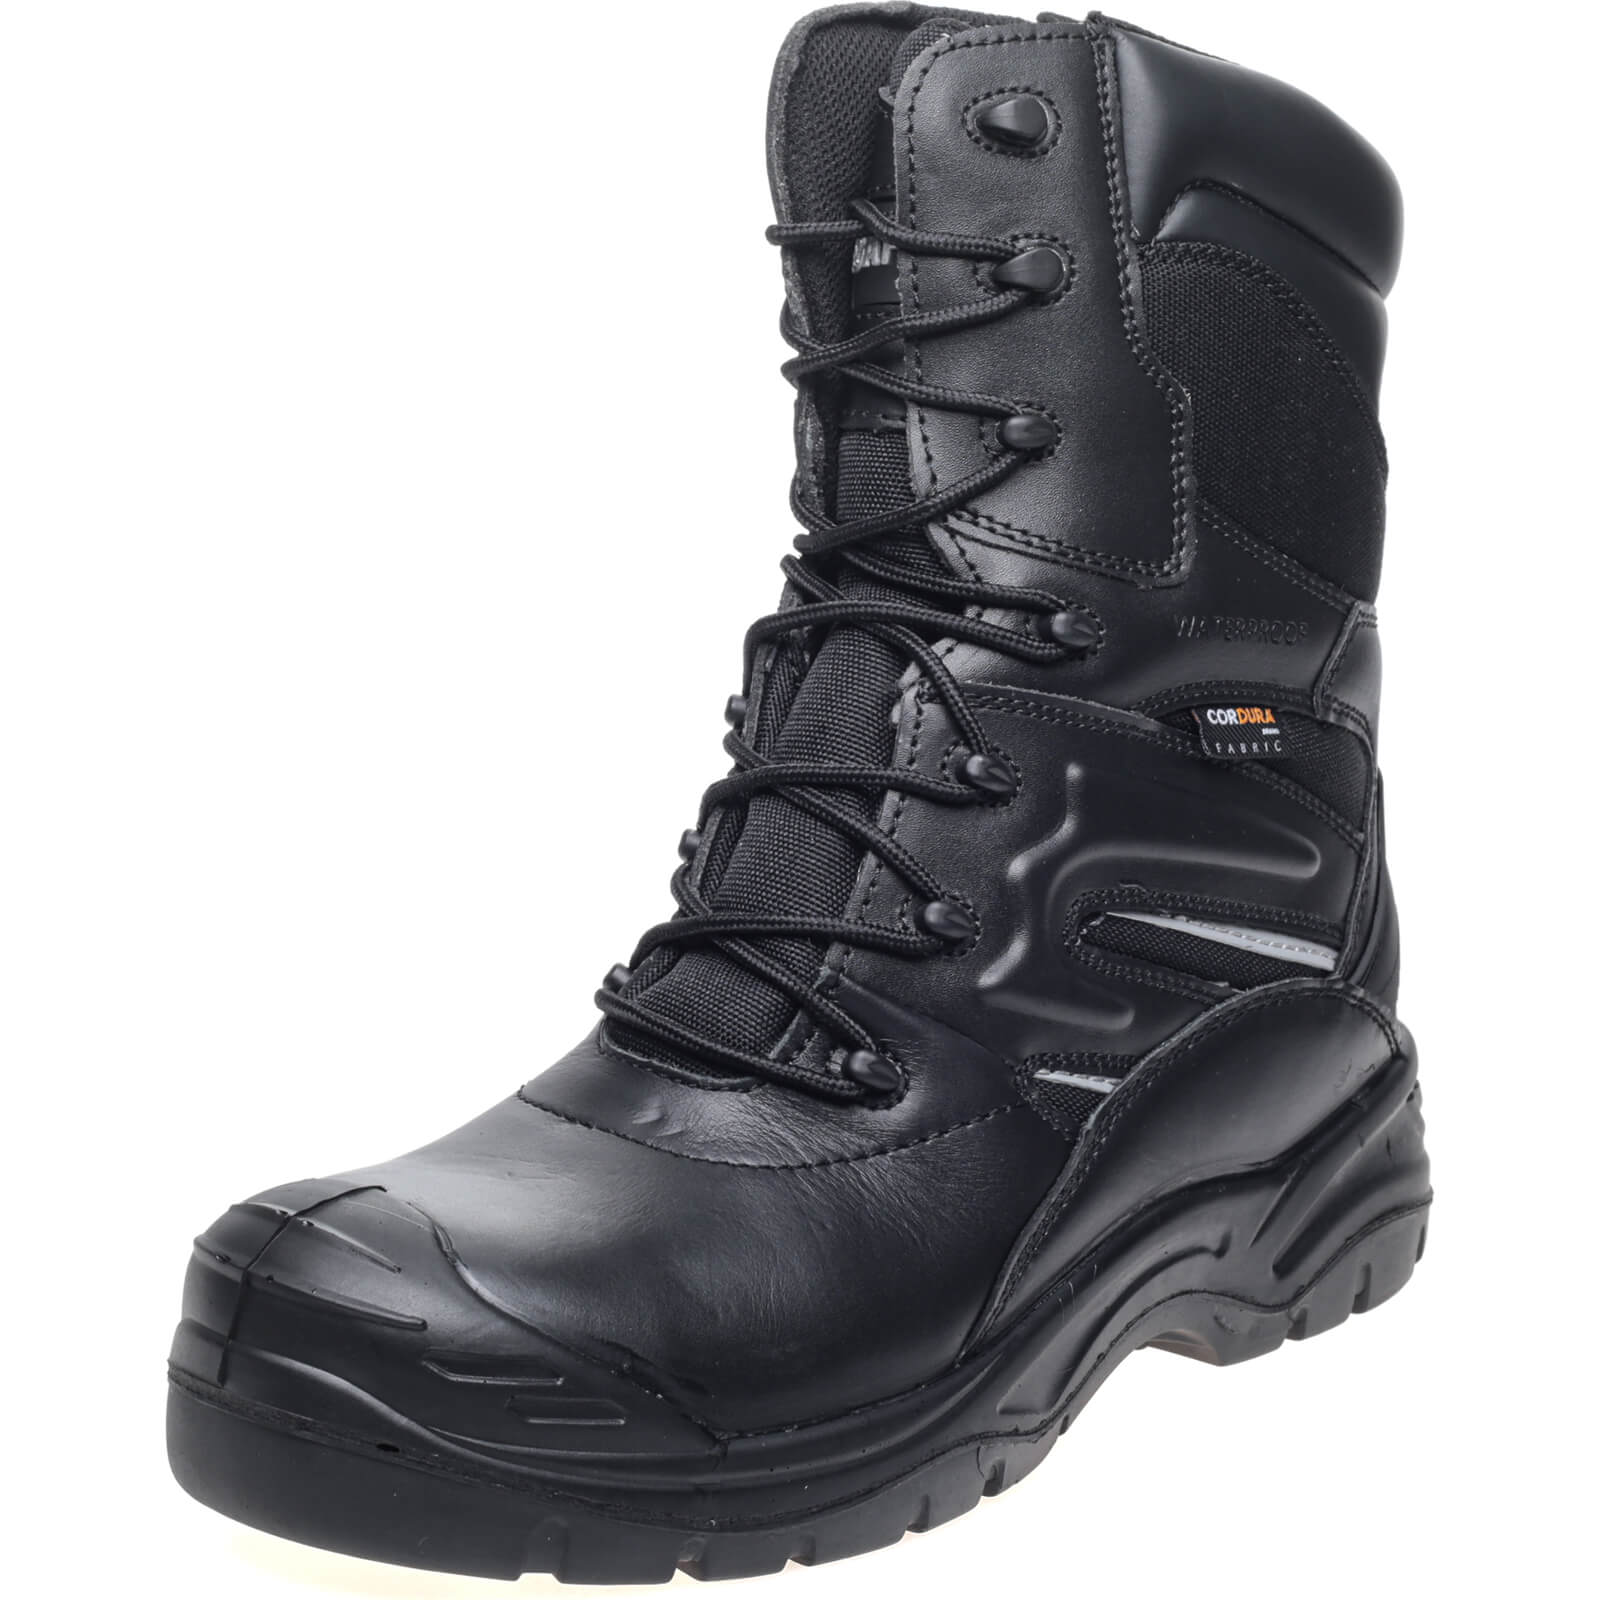 Image of Apache COMBAT Non Metallic High Leg Safety Boots Black Size 9